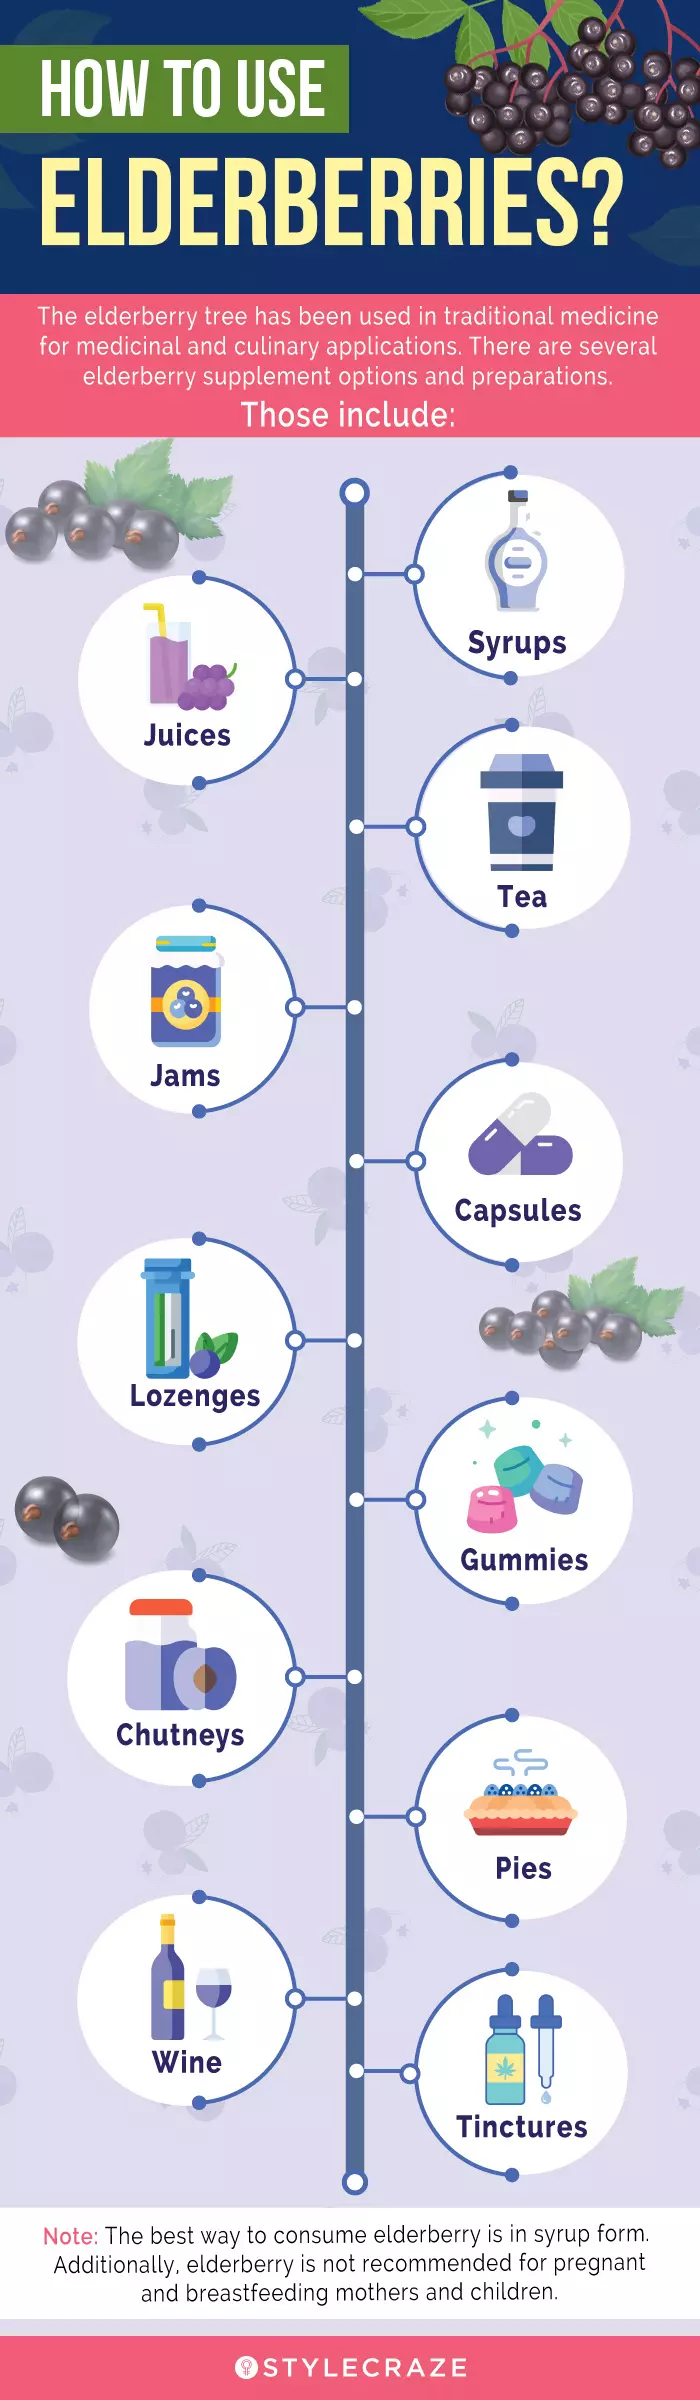 how to use elderberries (infographic)